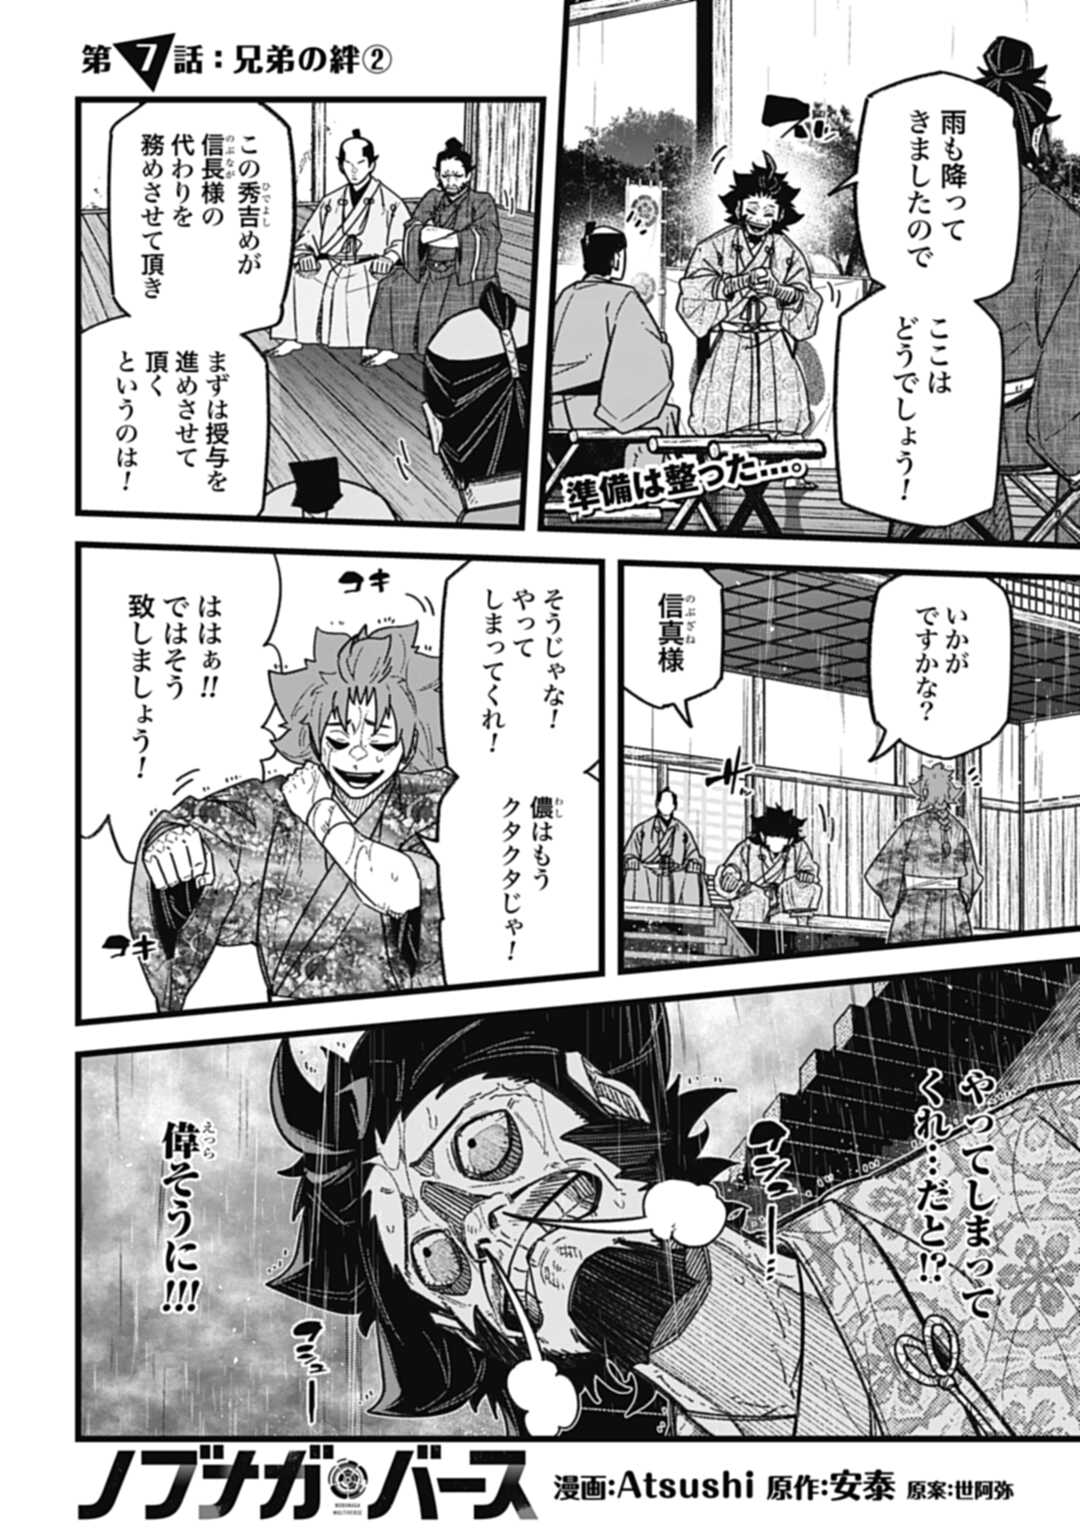 Nobunaga Multiverse - Chapter 7.2 - Page 1